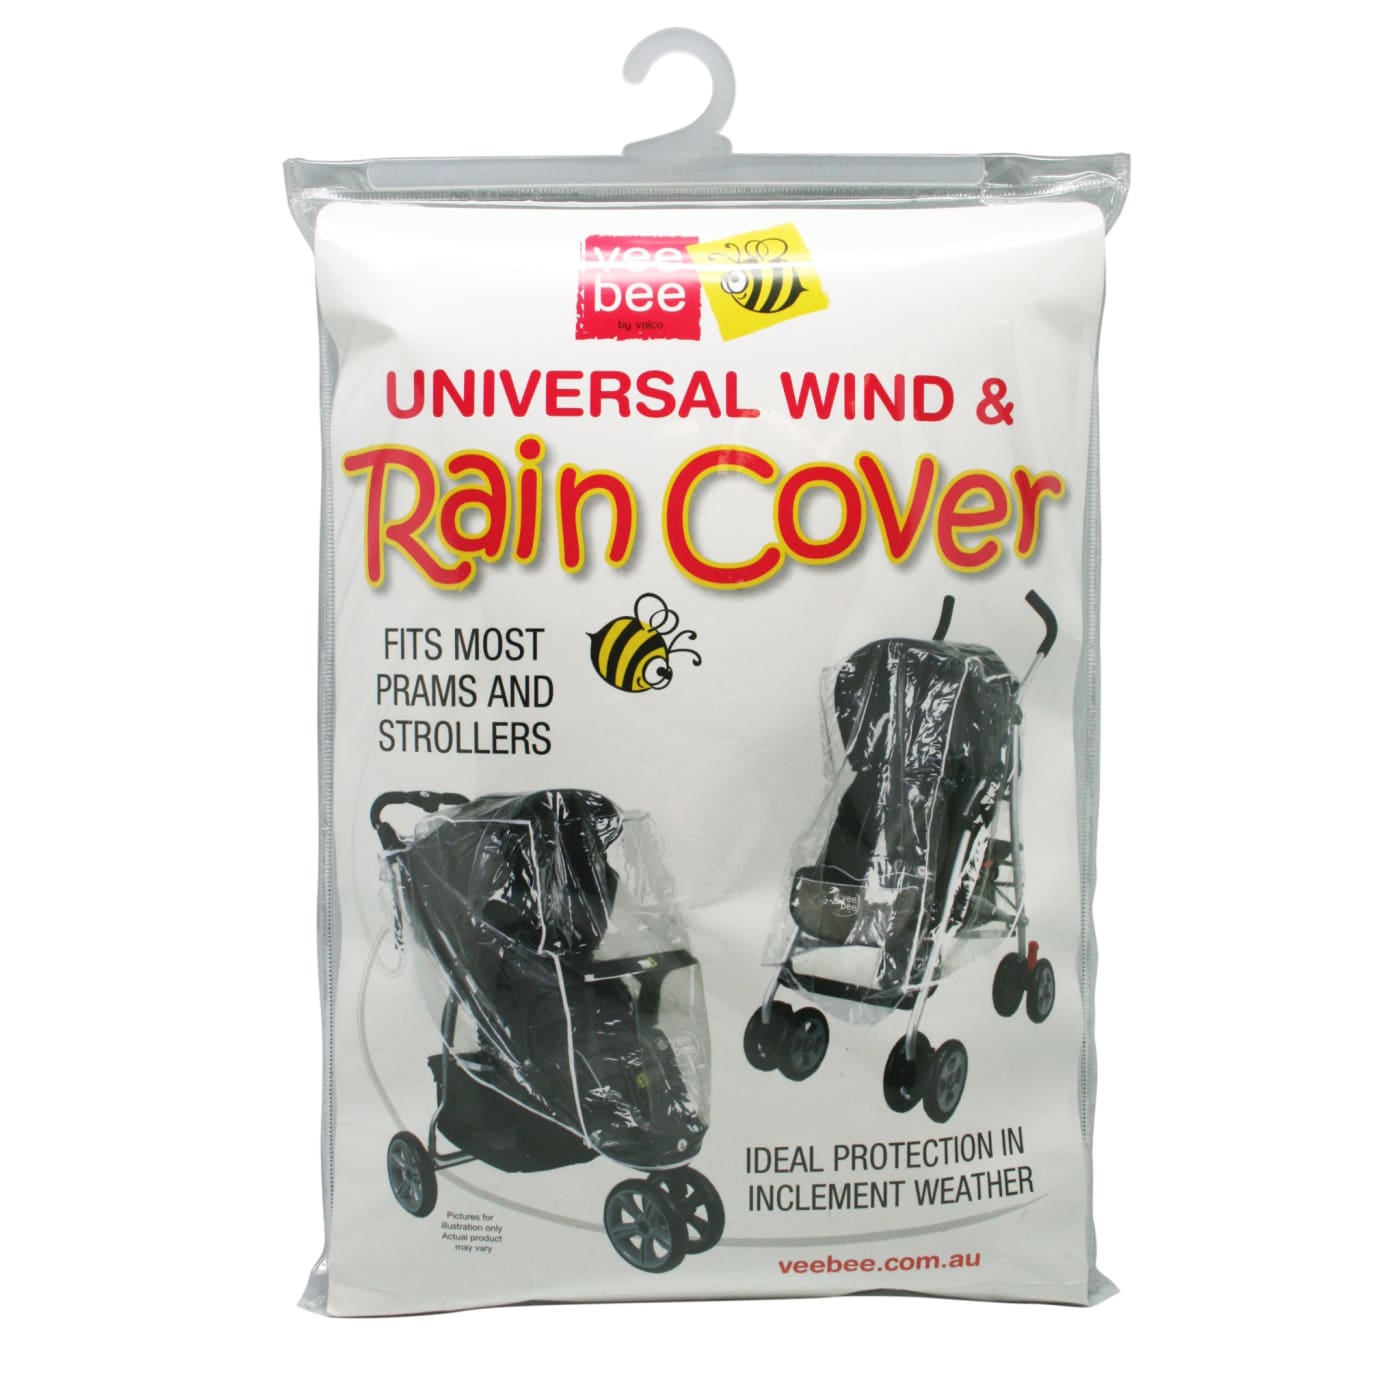 Veebee Universal Wind & Raincover - PRAMS & STROLLERS - SUN COVERS/WEATHER SHIELDS